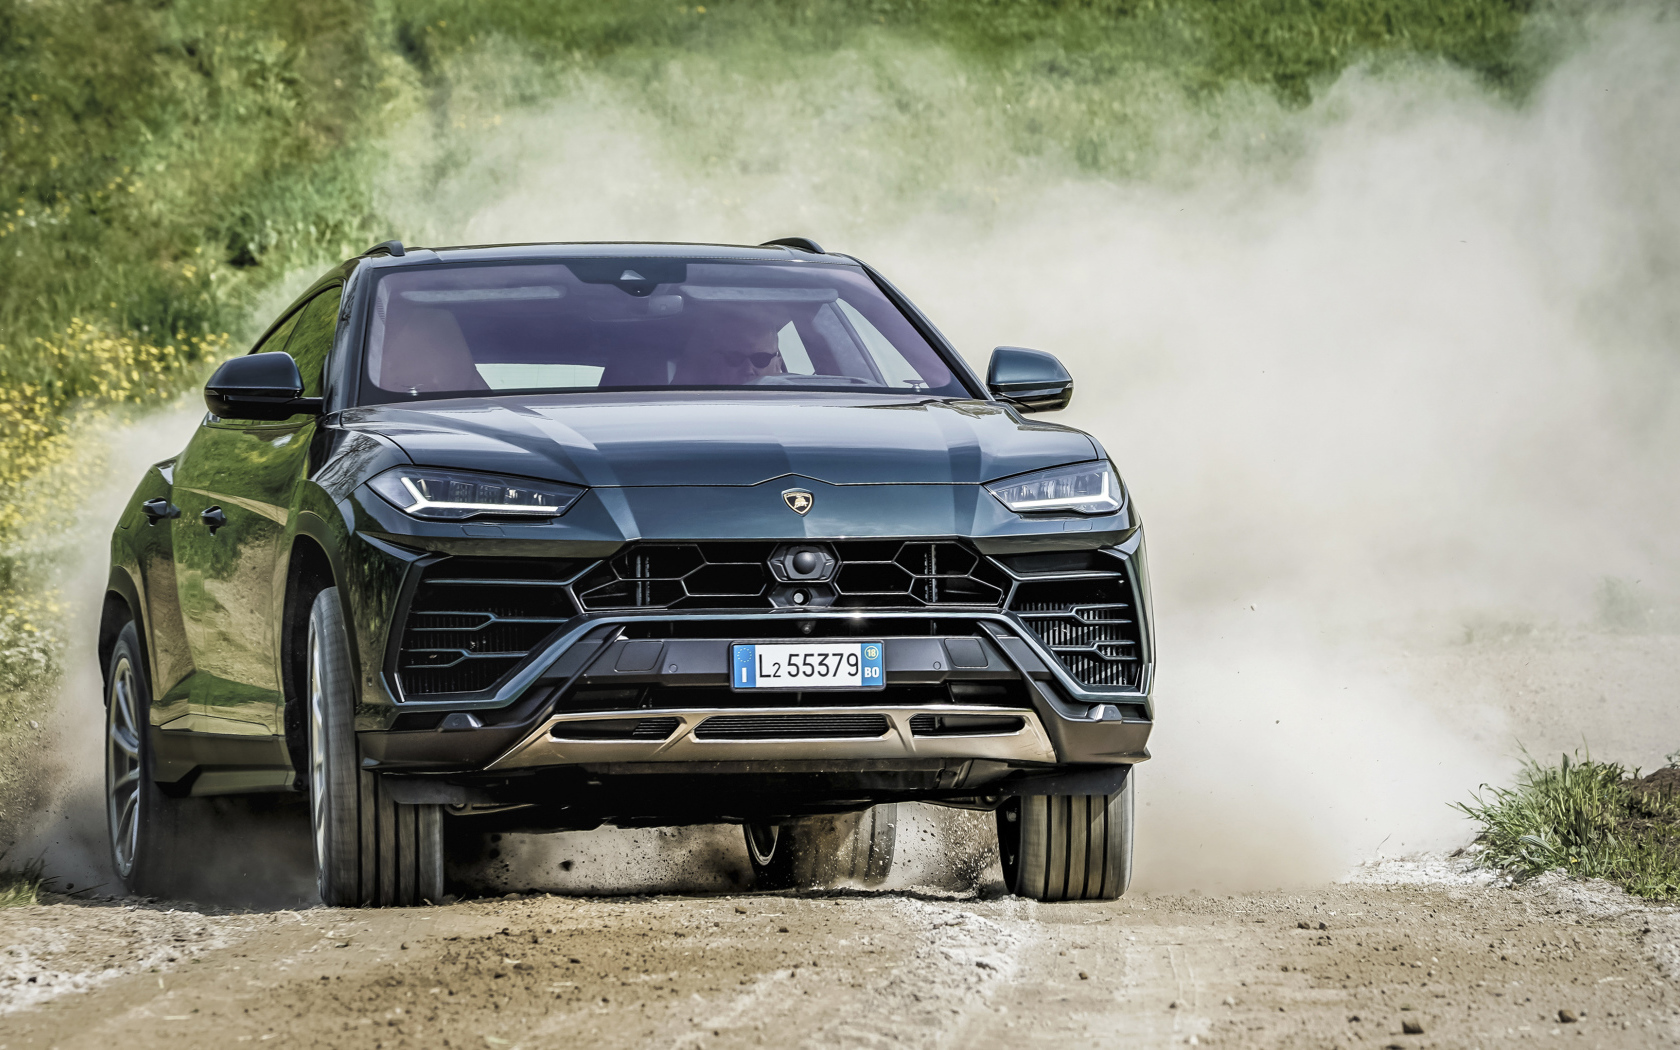 SUV Lamborghini Urus 2018 on the road in the dust Desktop wallpapers  1680x1050